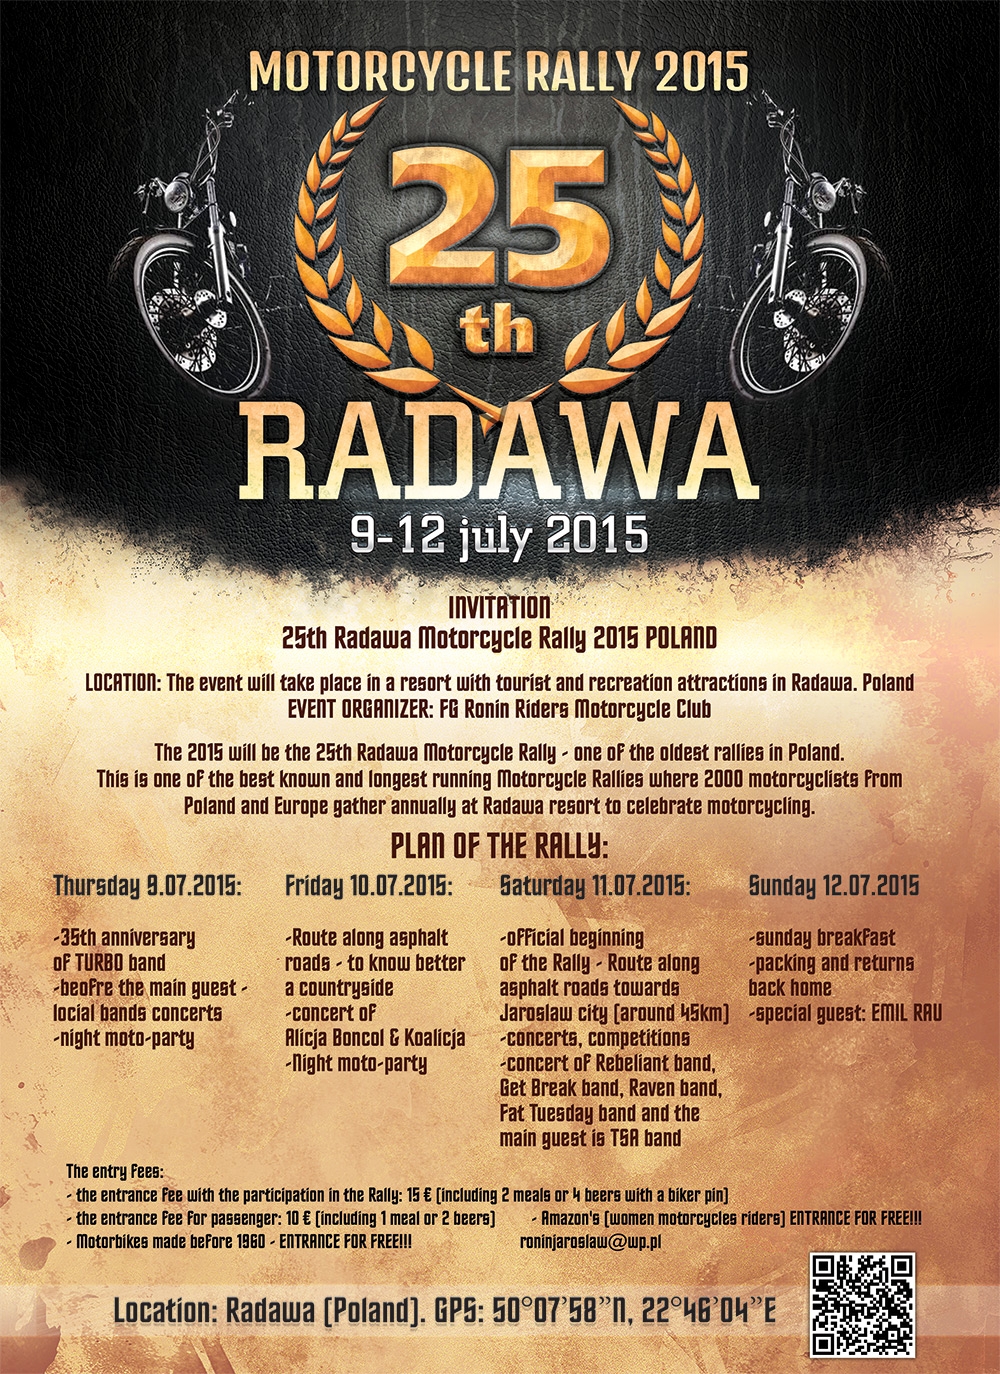 Radawa Motorcycle Rally 2015 - Invitation